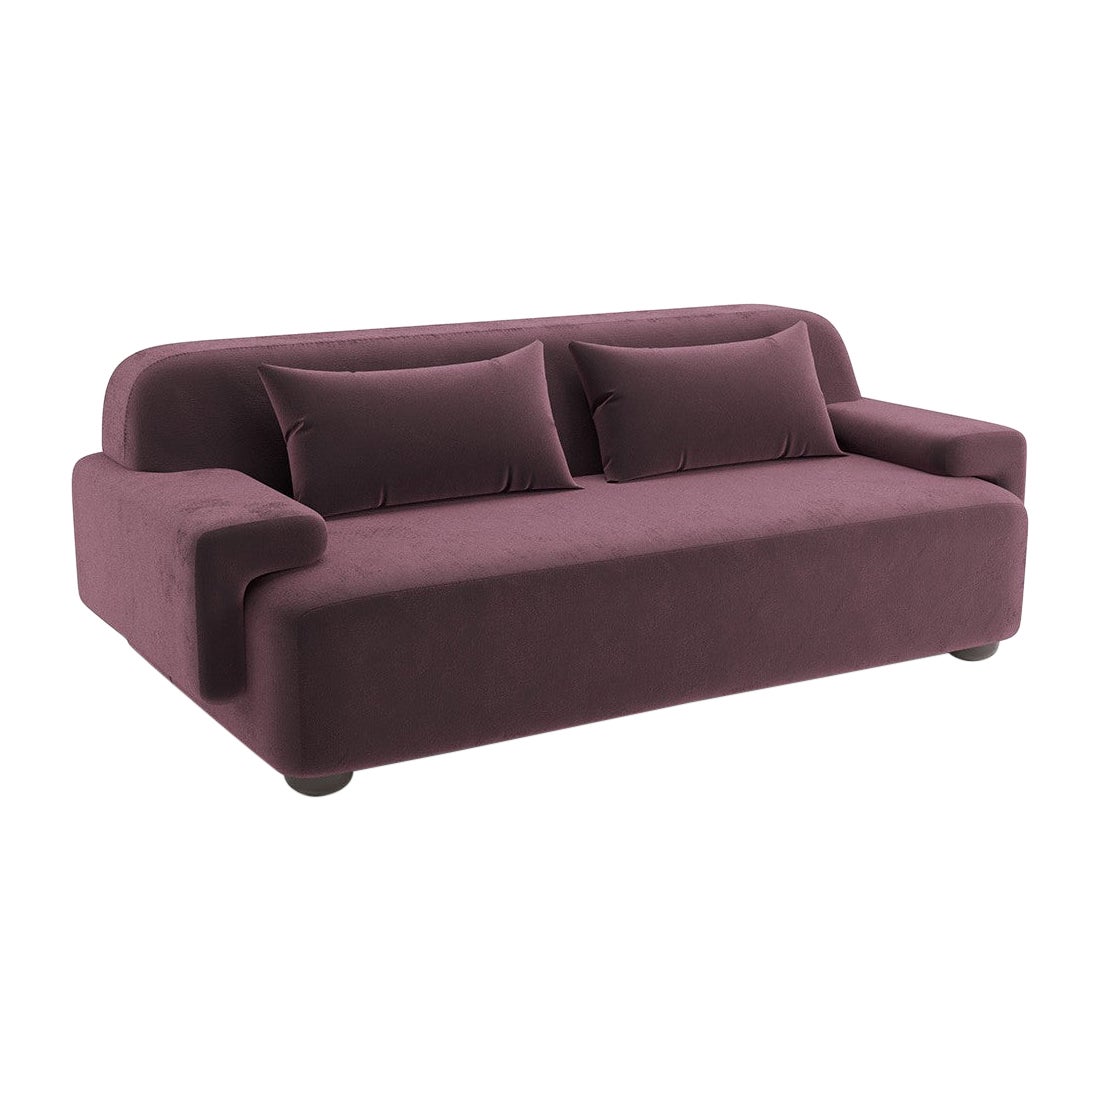 Popus Editions Lena 3 Seater Sofa in Bordeaux Como Velvet Upholstery For Sale